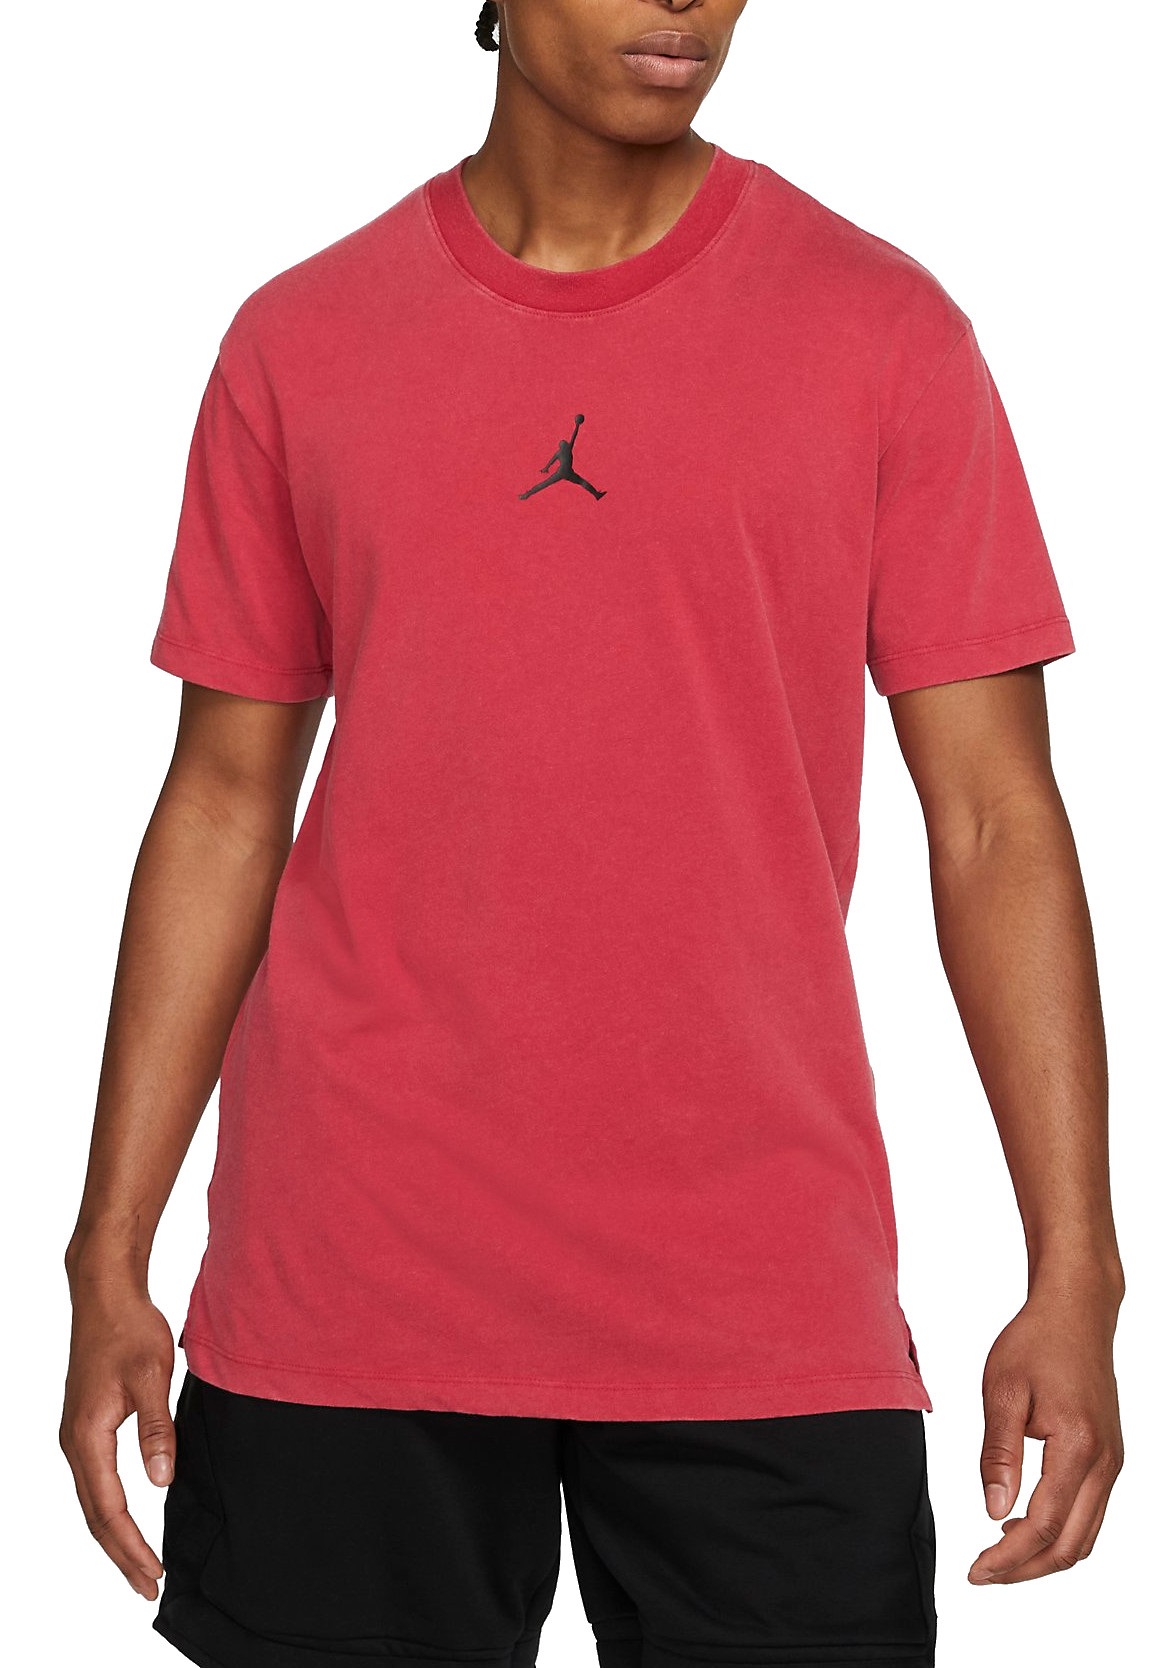 T-shirt Jordan Dri-FIT Air Men s Short-Sleeve Graphic Top